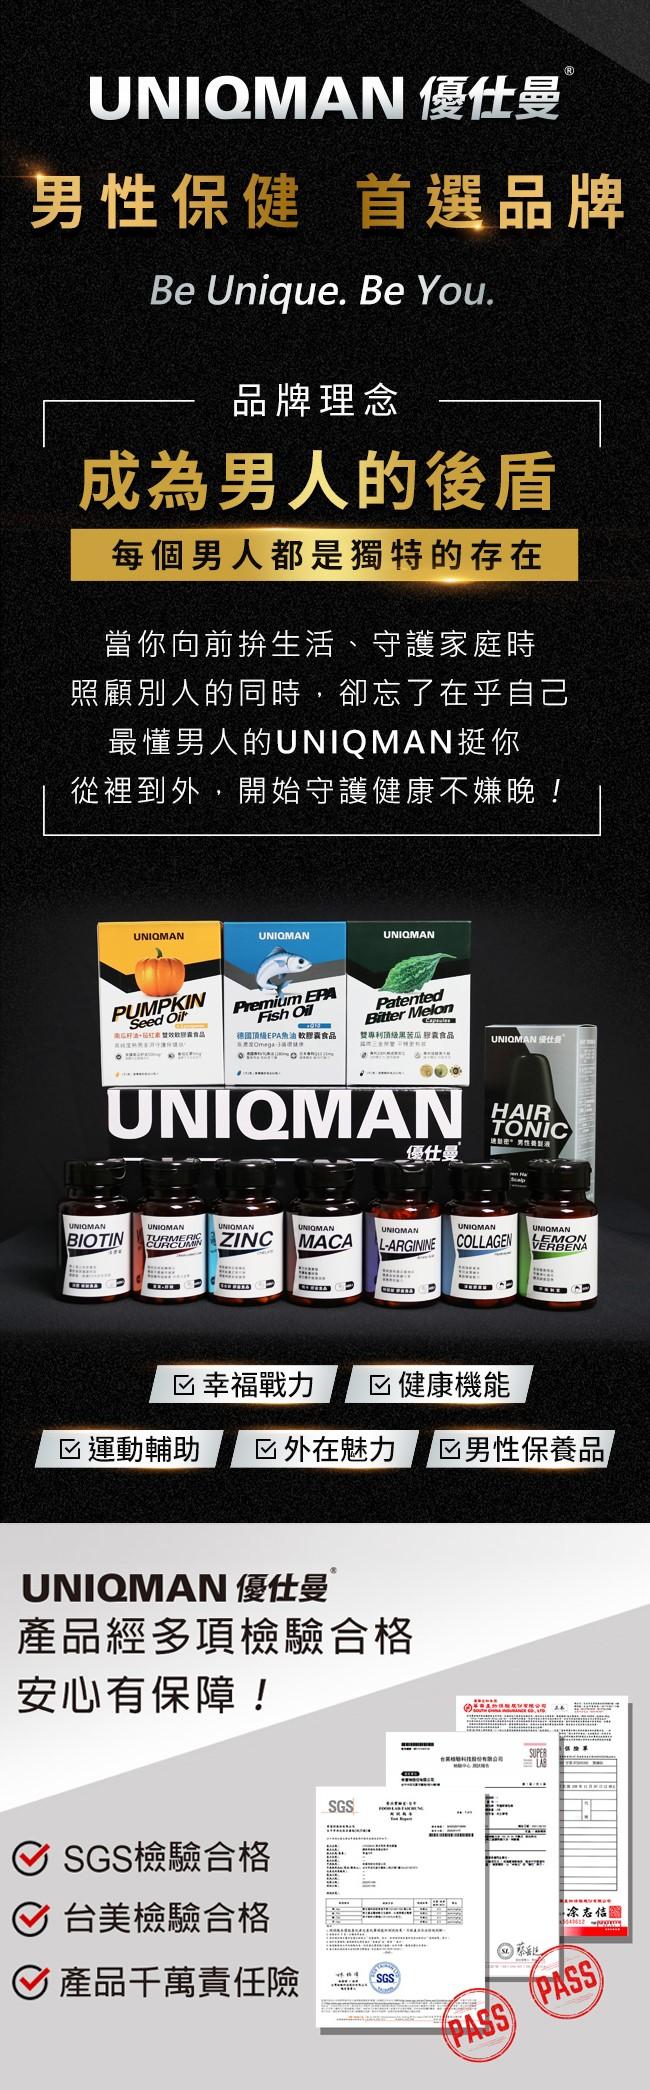 UNIQMAN-南瓜籽油+茄紅素 雙效軟膠囊食品(60粒/盒)﻿產品資訊